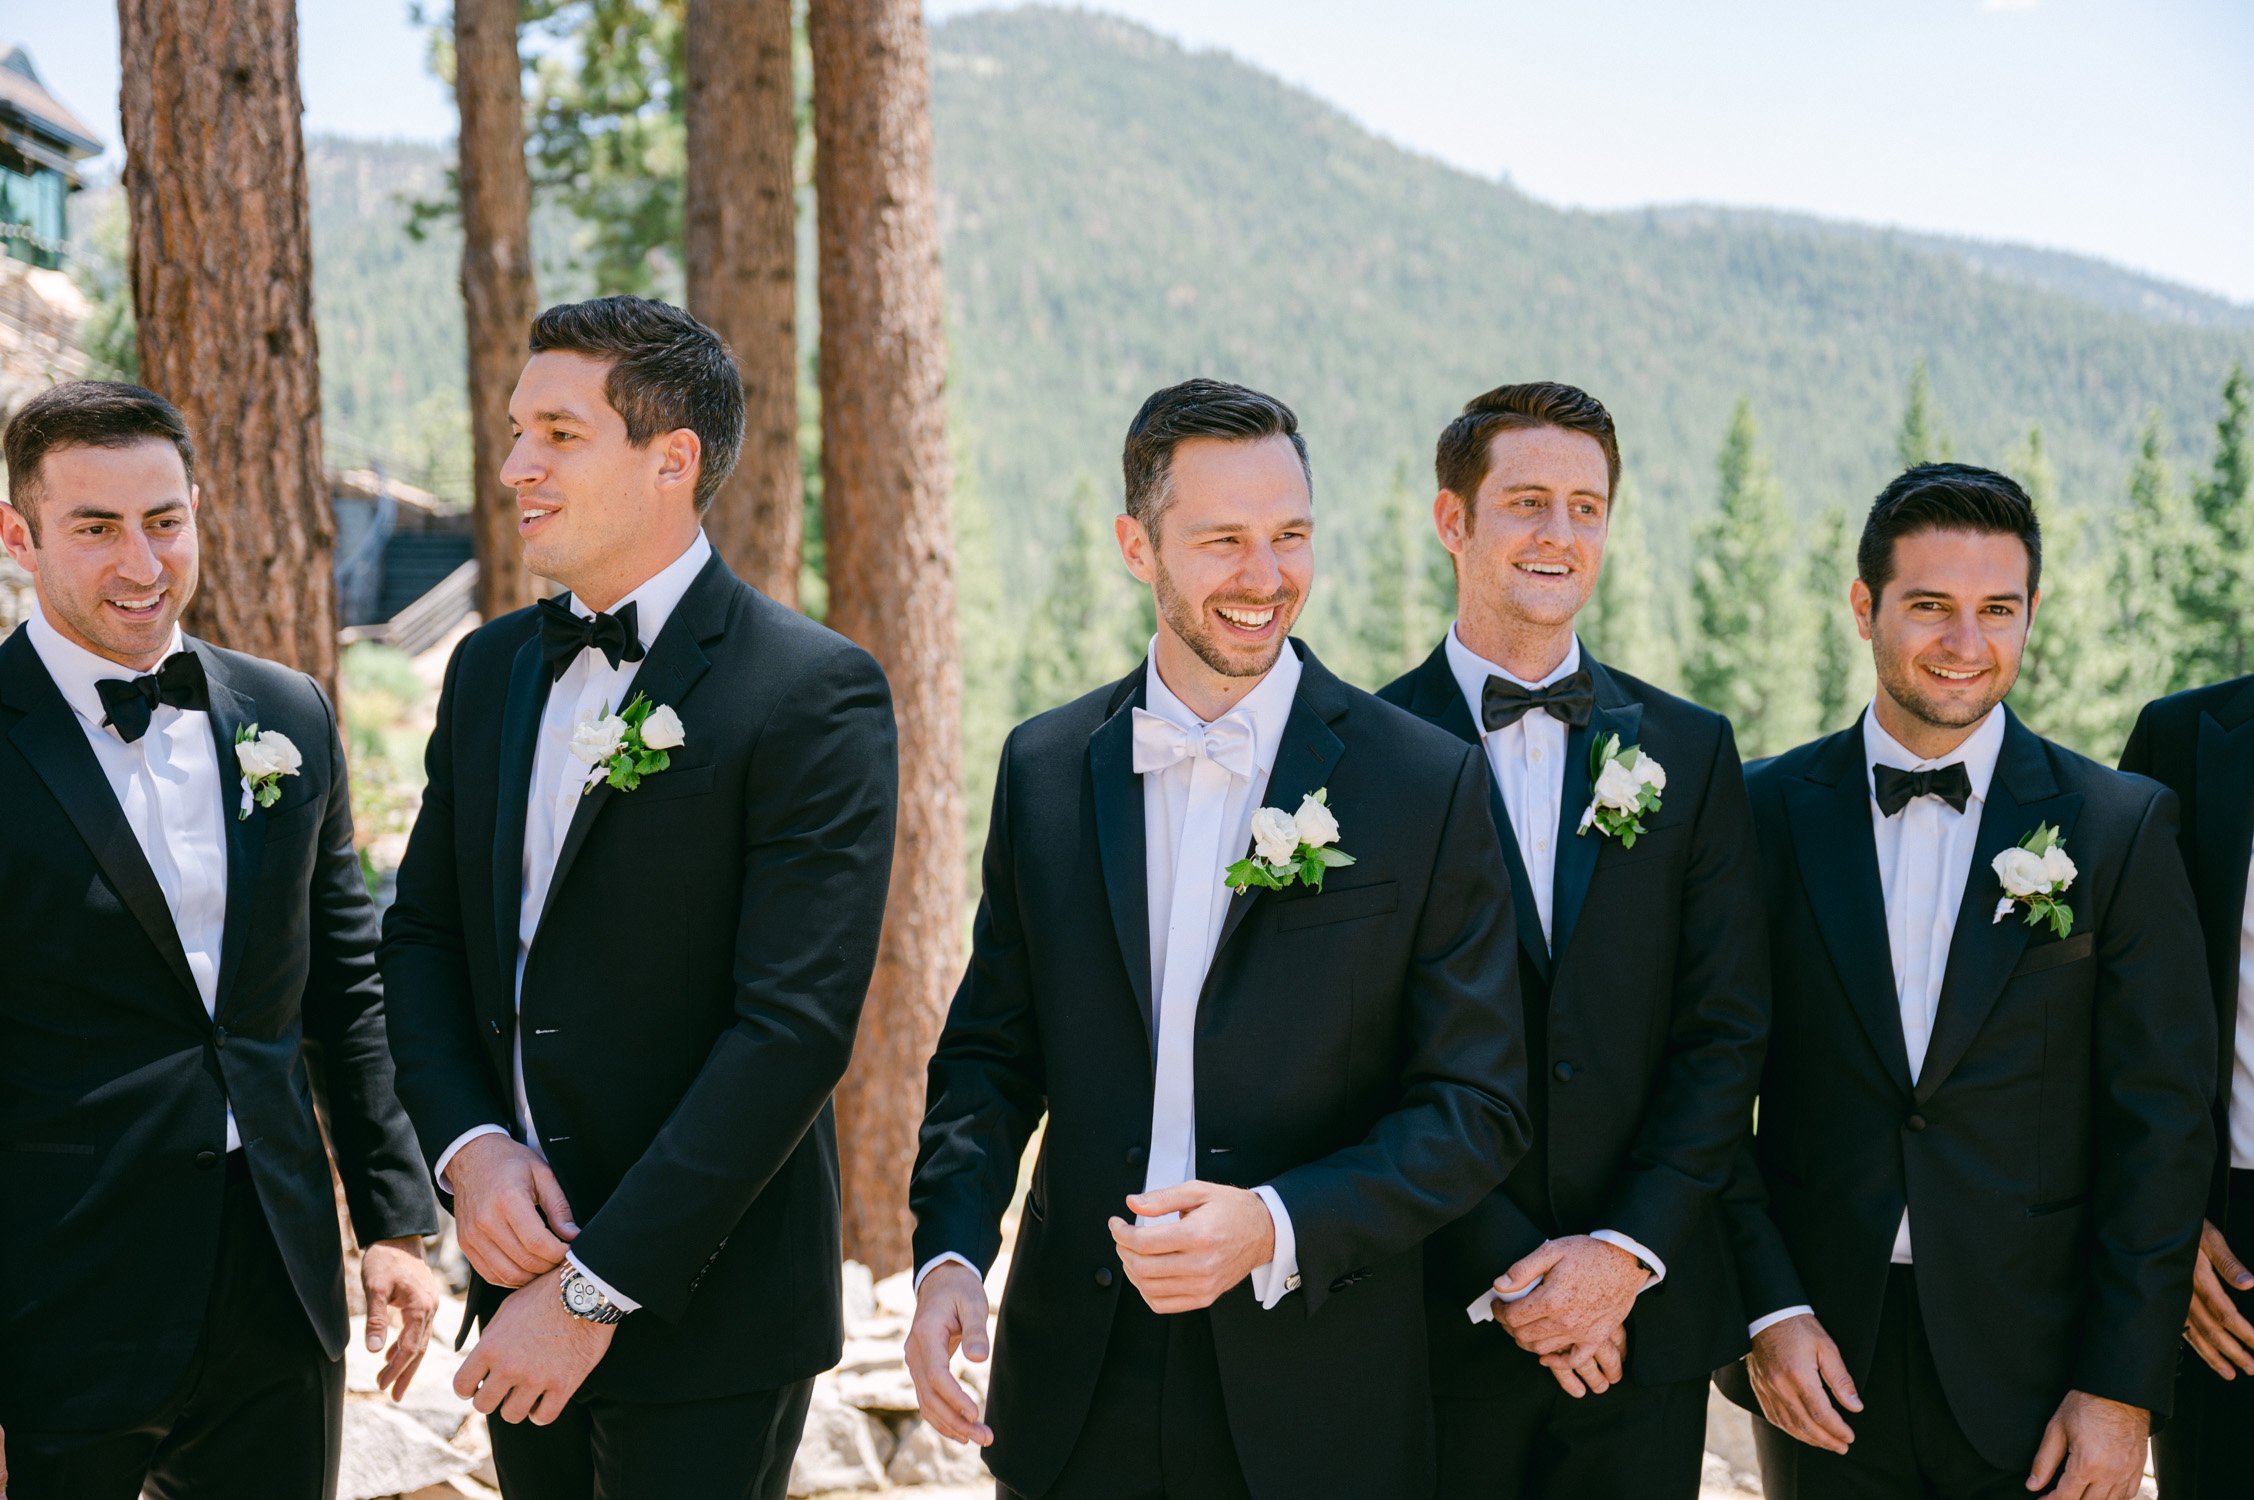 Martis Camp wedding photo of groom and groomsmen